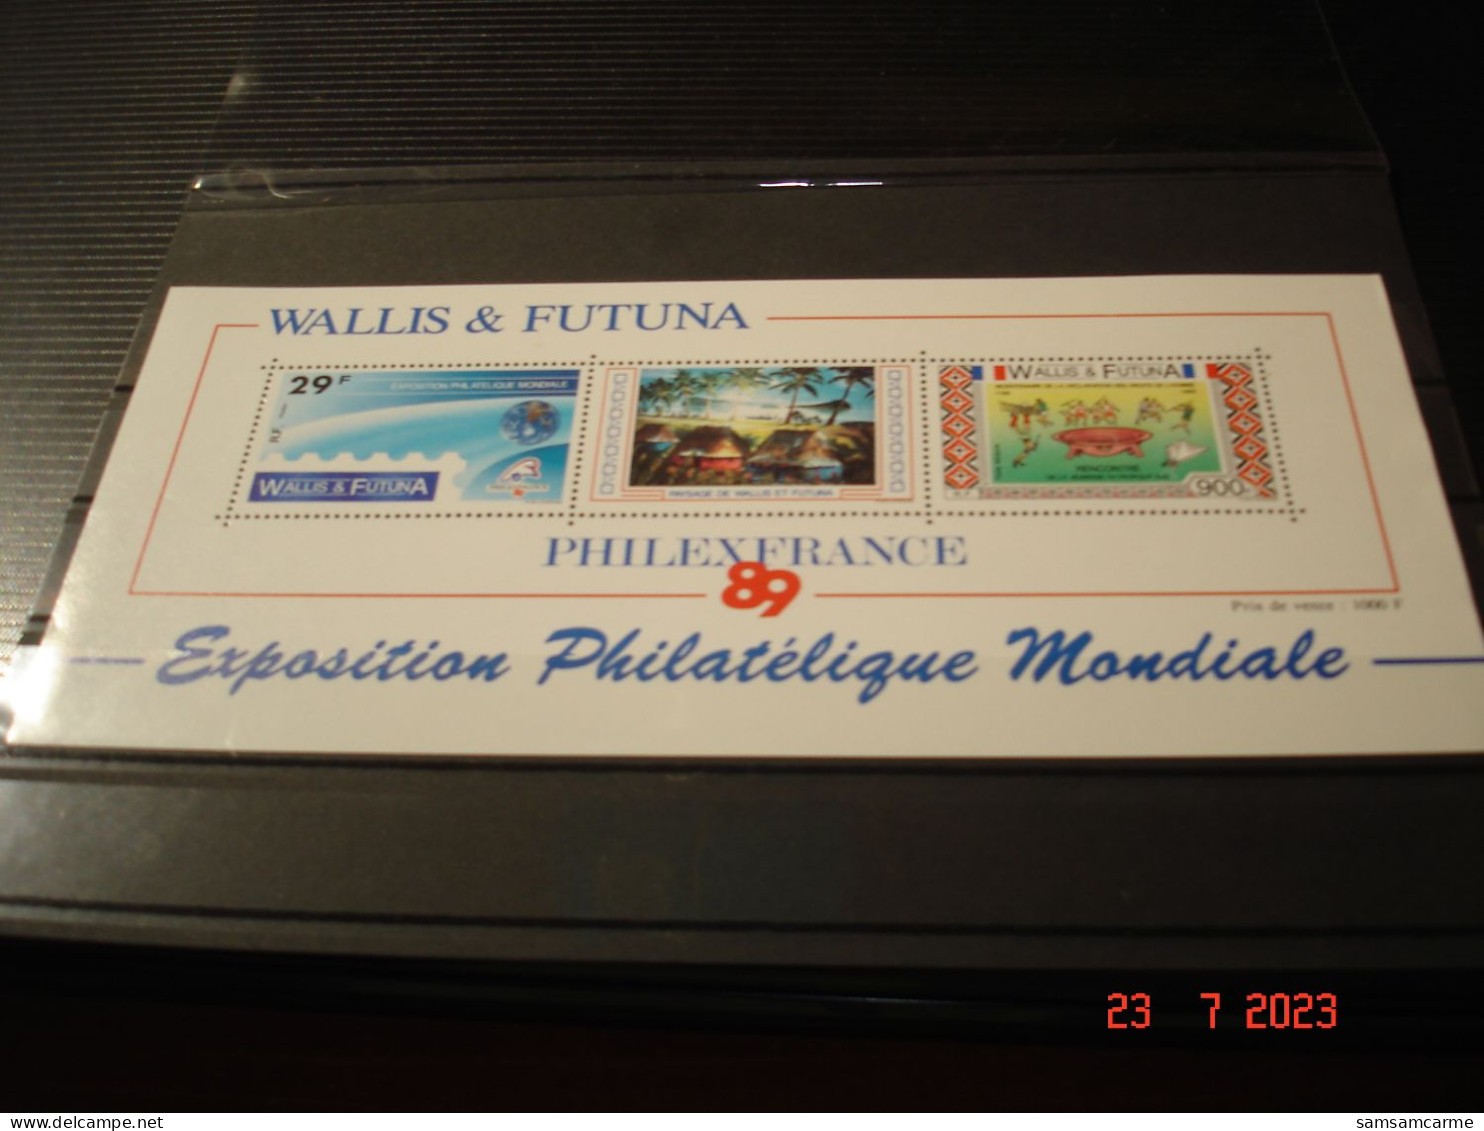 WALLIS ET FUTUNA    ANNEE  1989     BLOC FEUILLET NEUF N° 4    "  PHILEX FANCE 89 "  EXPOSITION PHILATELIQUE MONDIALE - Hojas Y Bloques